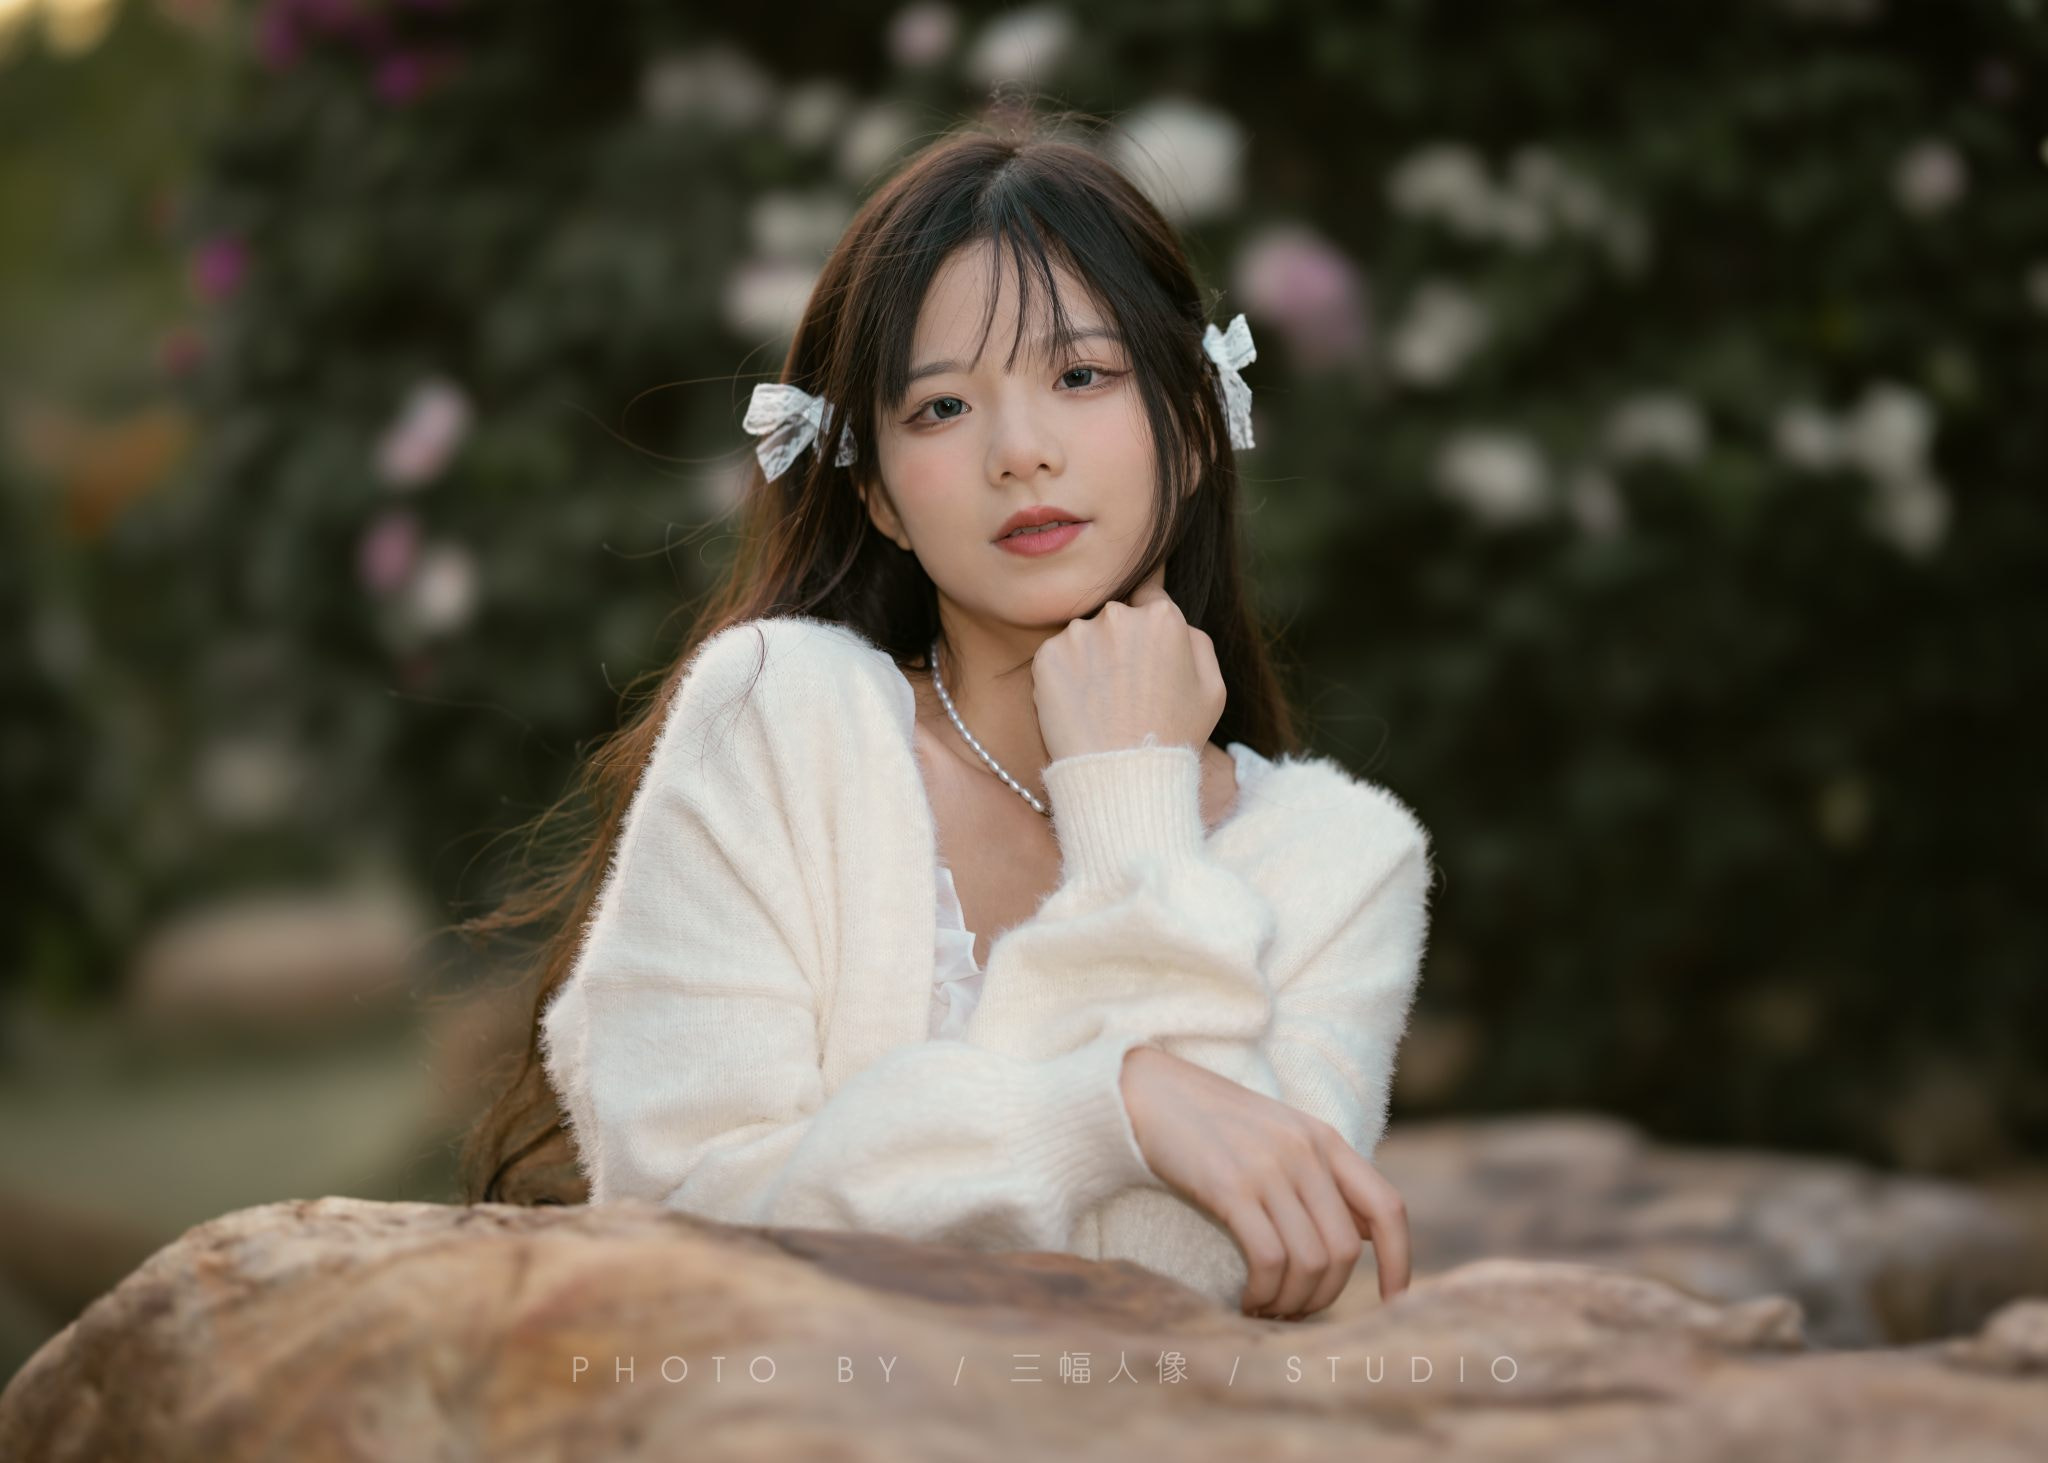 Qin Xiaoqiang Women Asian Brunette Ribbon White Clothing Looking At Viewer Outdoors Portrait 2048x1463